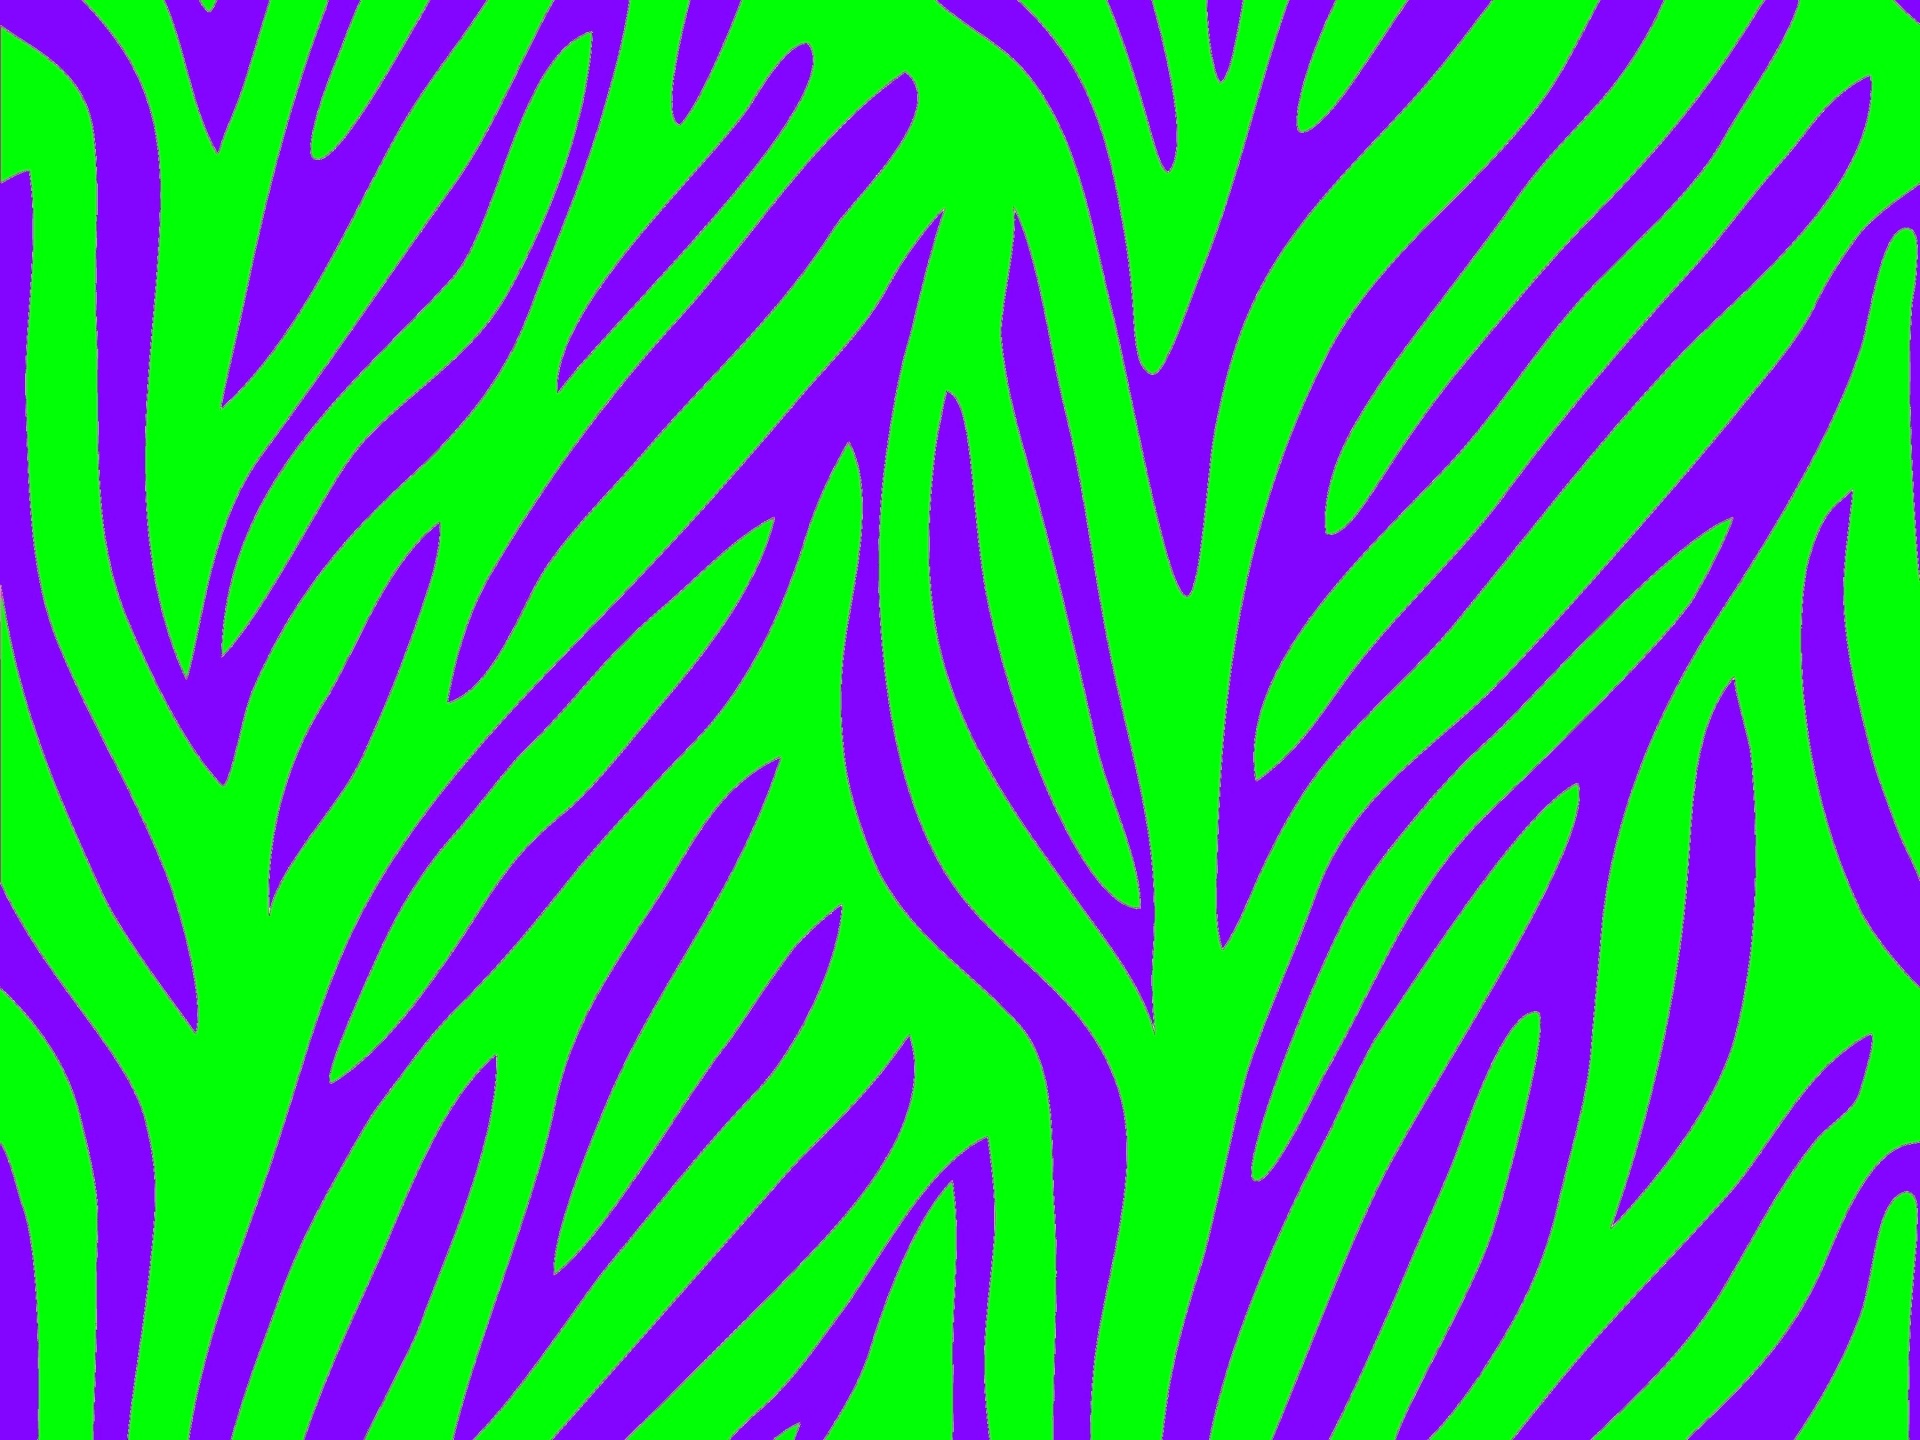 green zebra backgrounds